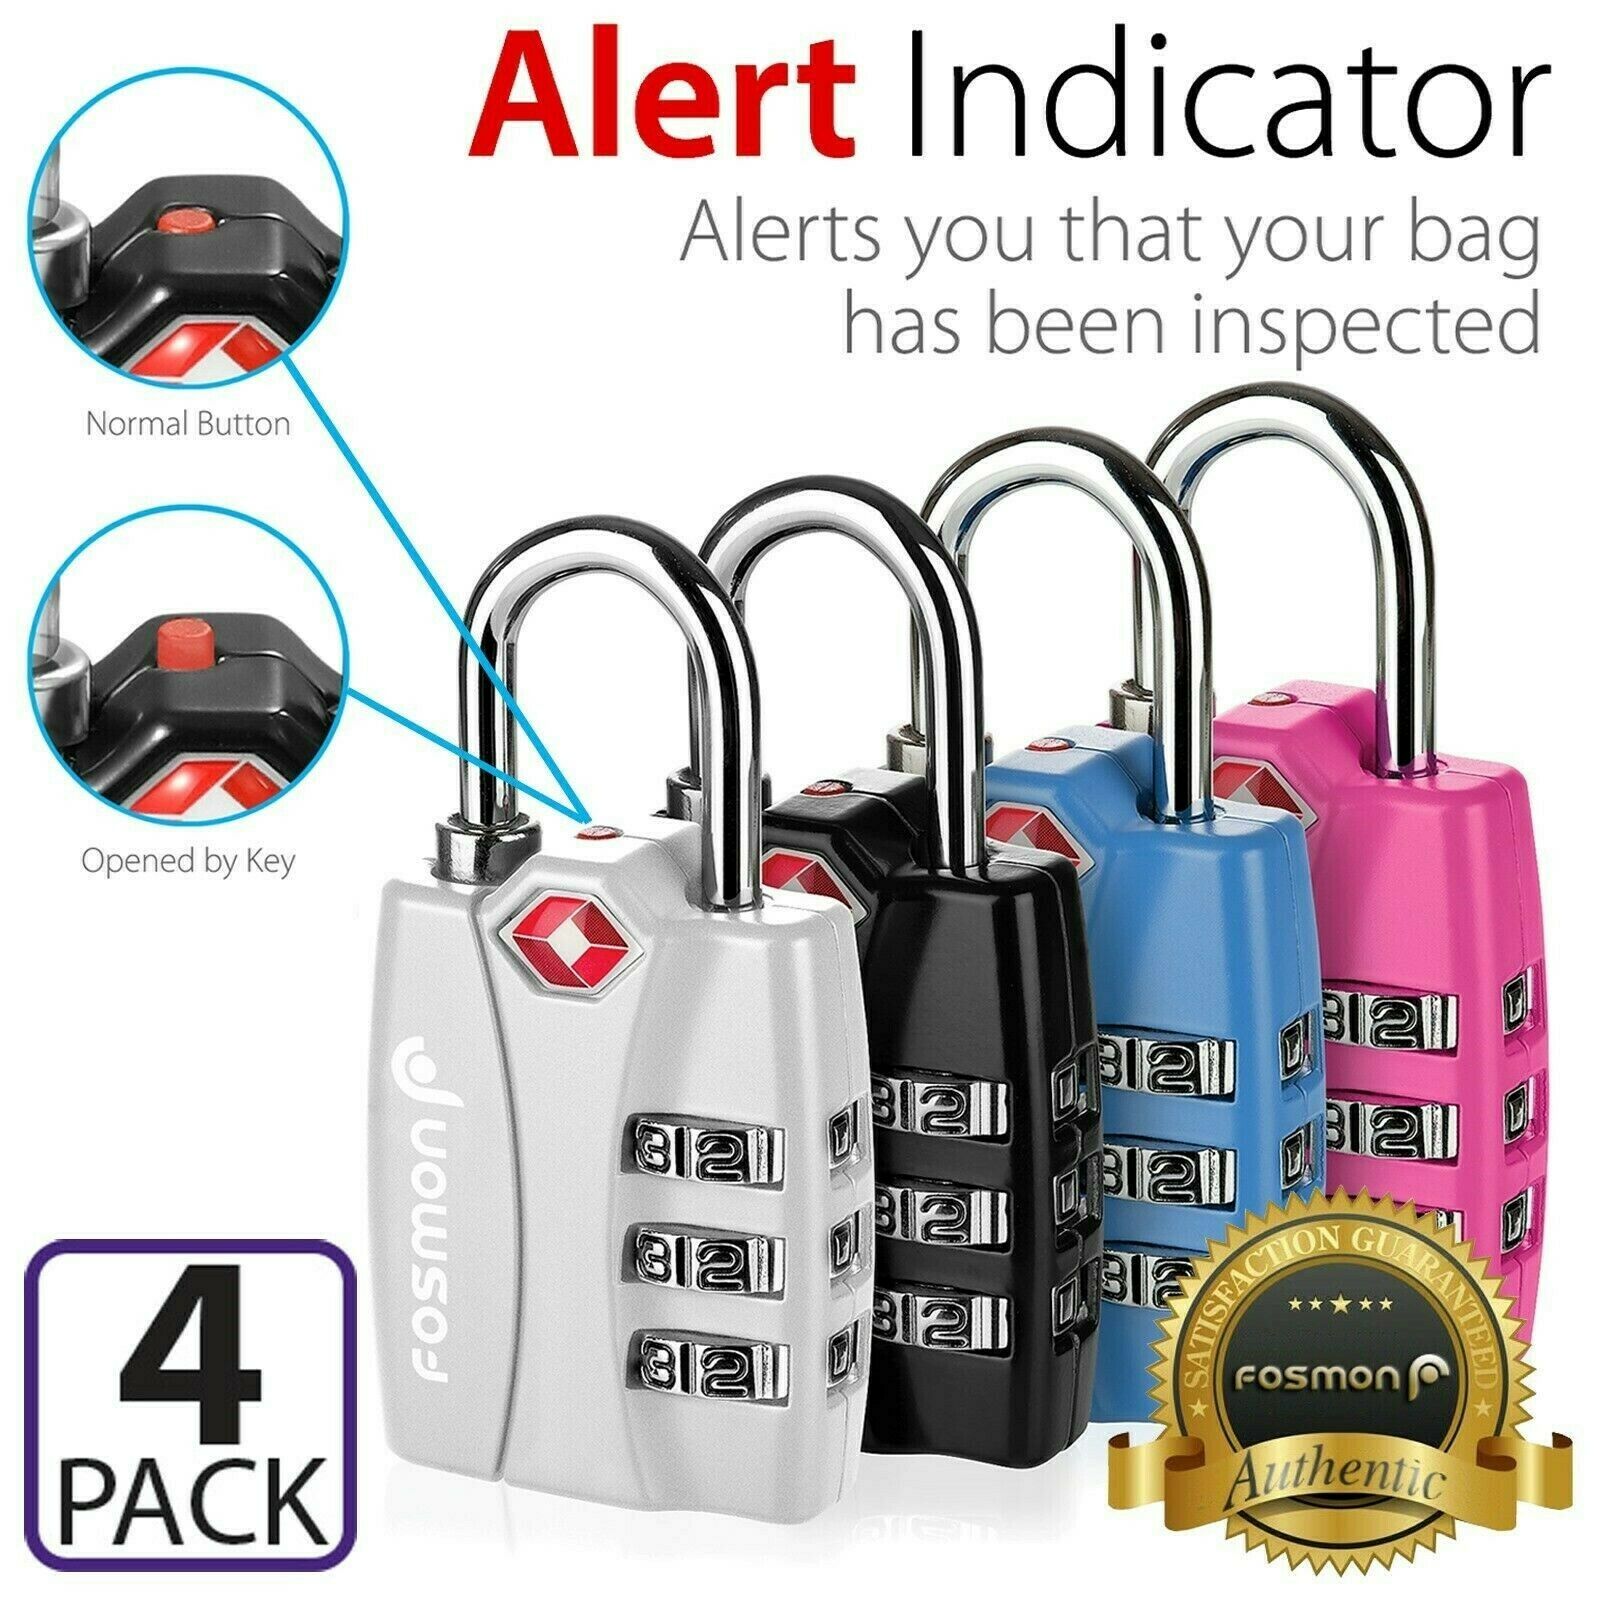 4x [tsa Approve] 3 Digit Alert Indicator Travel Luggage Bag Lock Padlock Reset